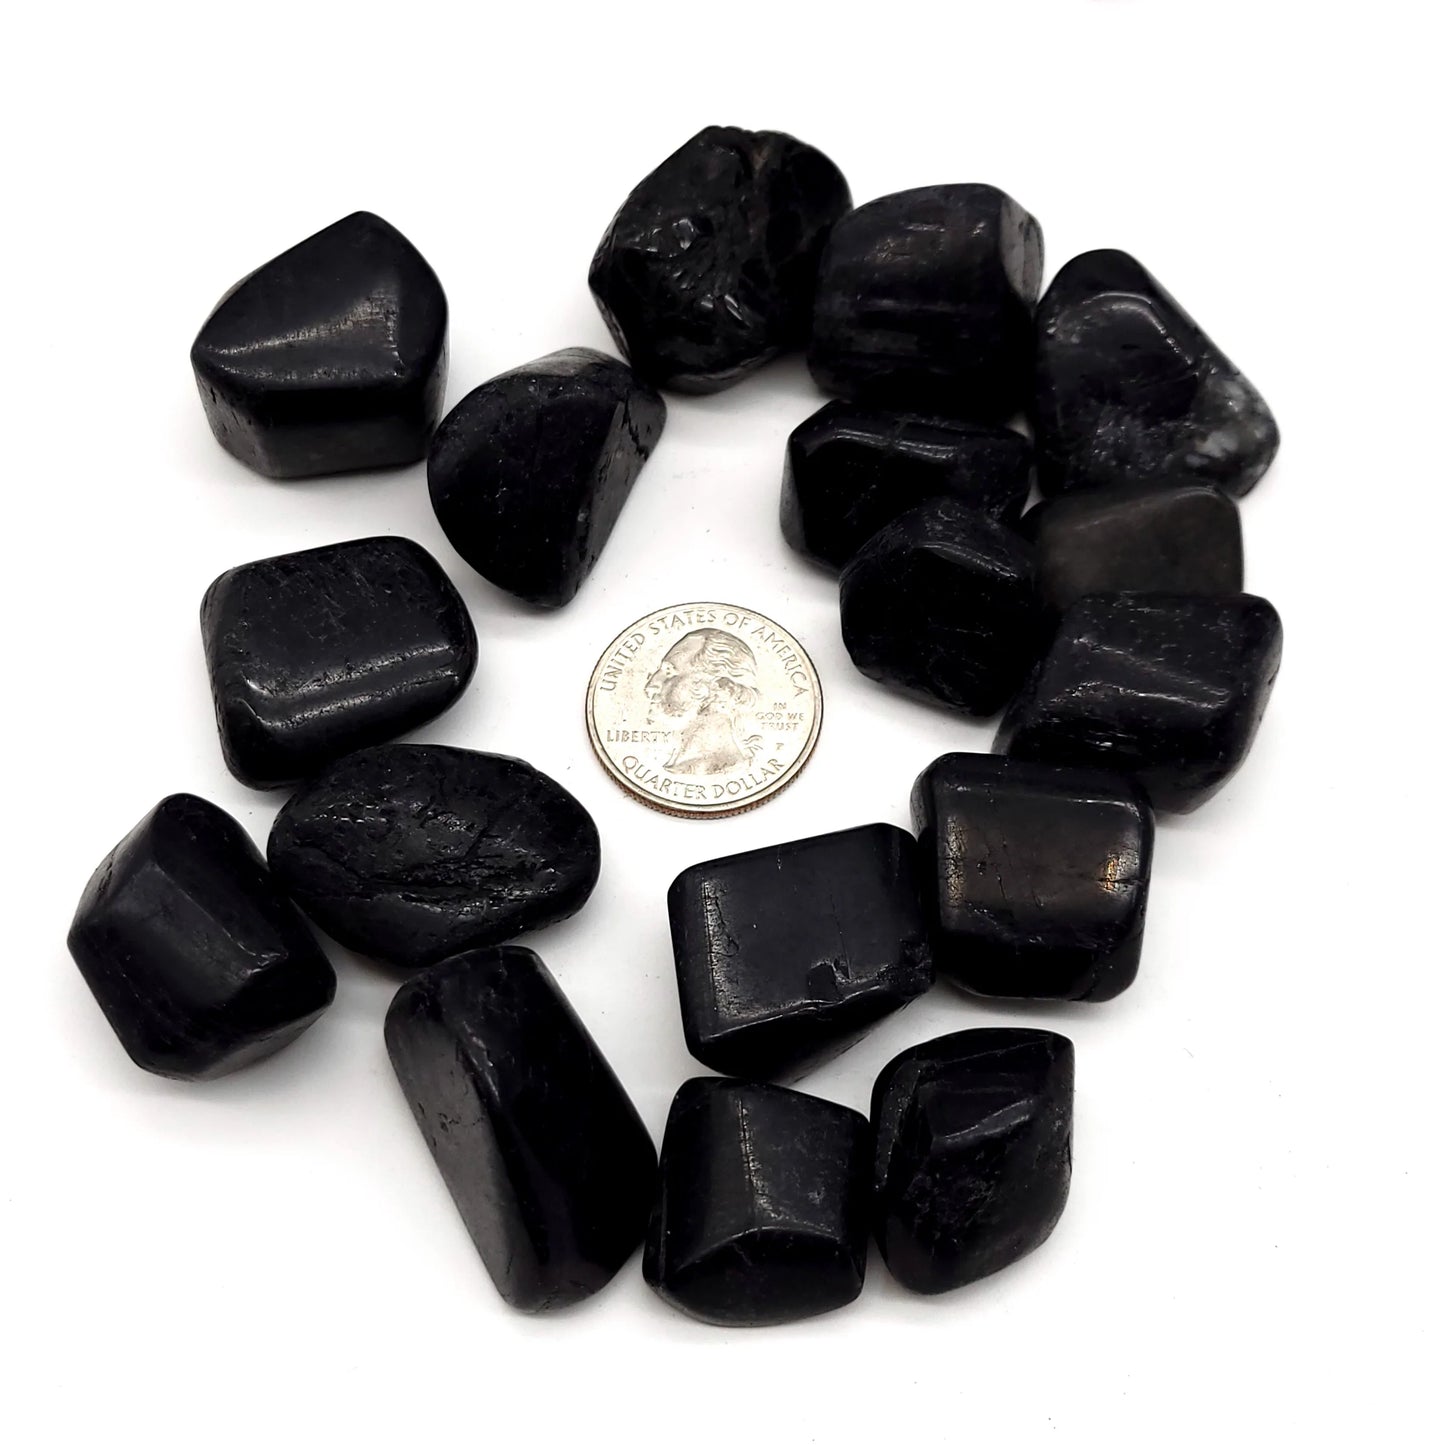 Black Tourmaline Tumbled Stones - Bulk Wholesale choose: 1lb, 3lbs or 5lbs